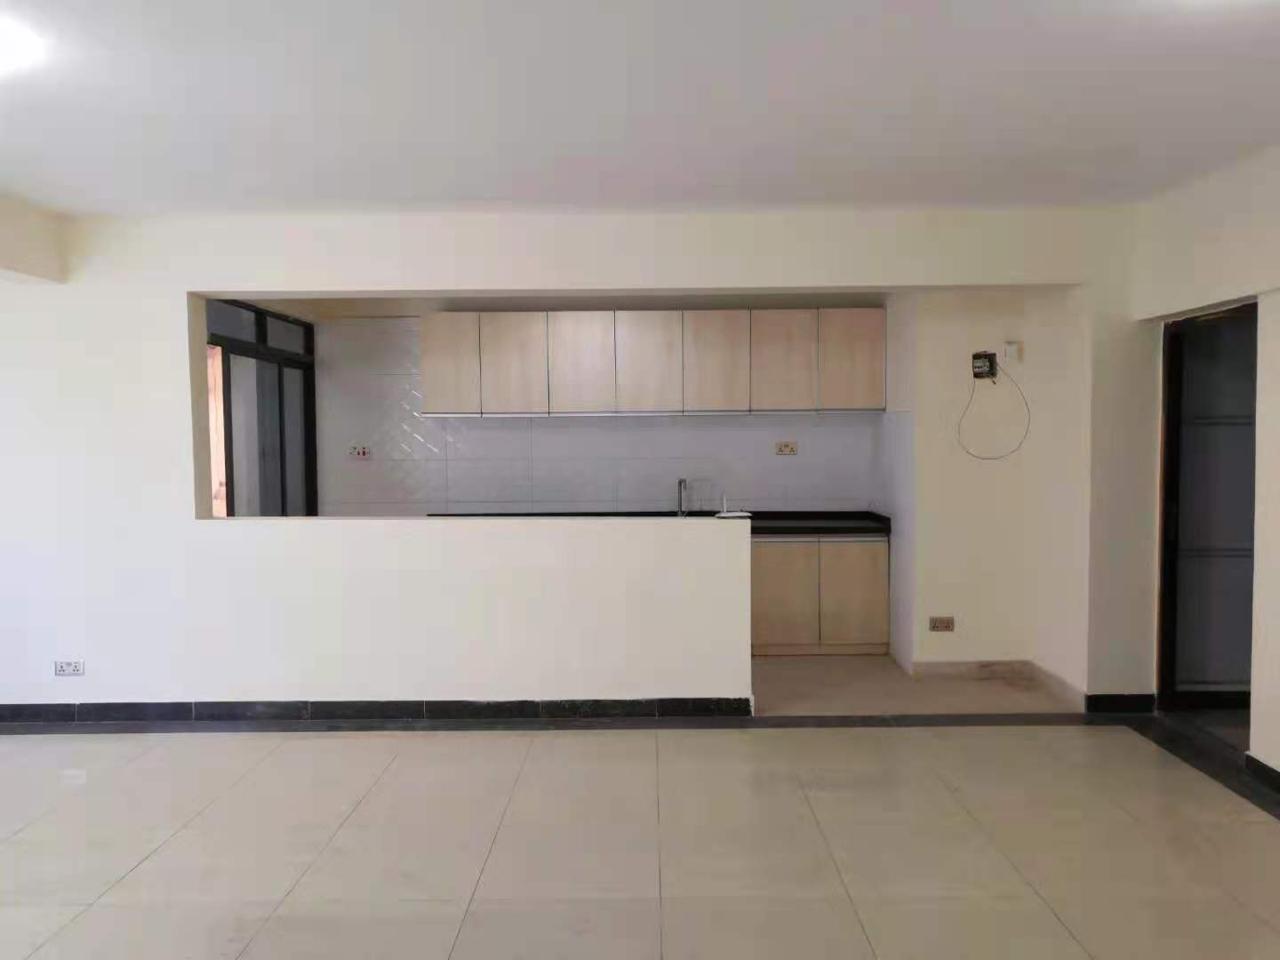 Padmore Residencies. Studio Apartments, 1 bedroom apartments, 2 bedroom apartments for sale in Kilimani, Nairobi. Musilli Homes.